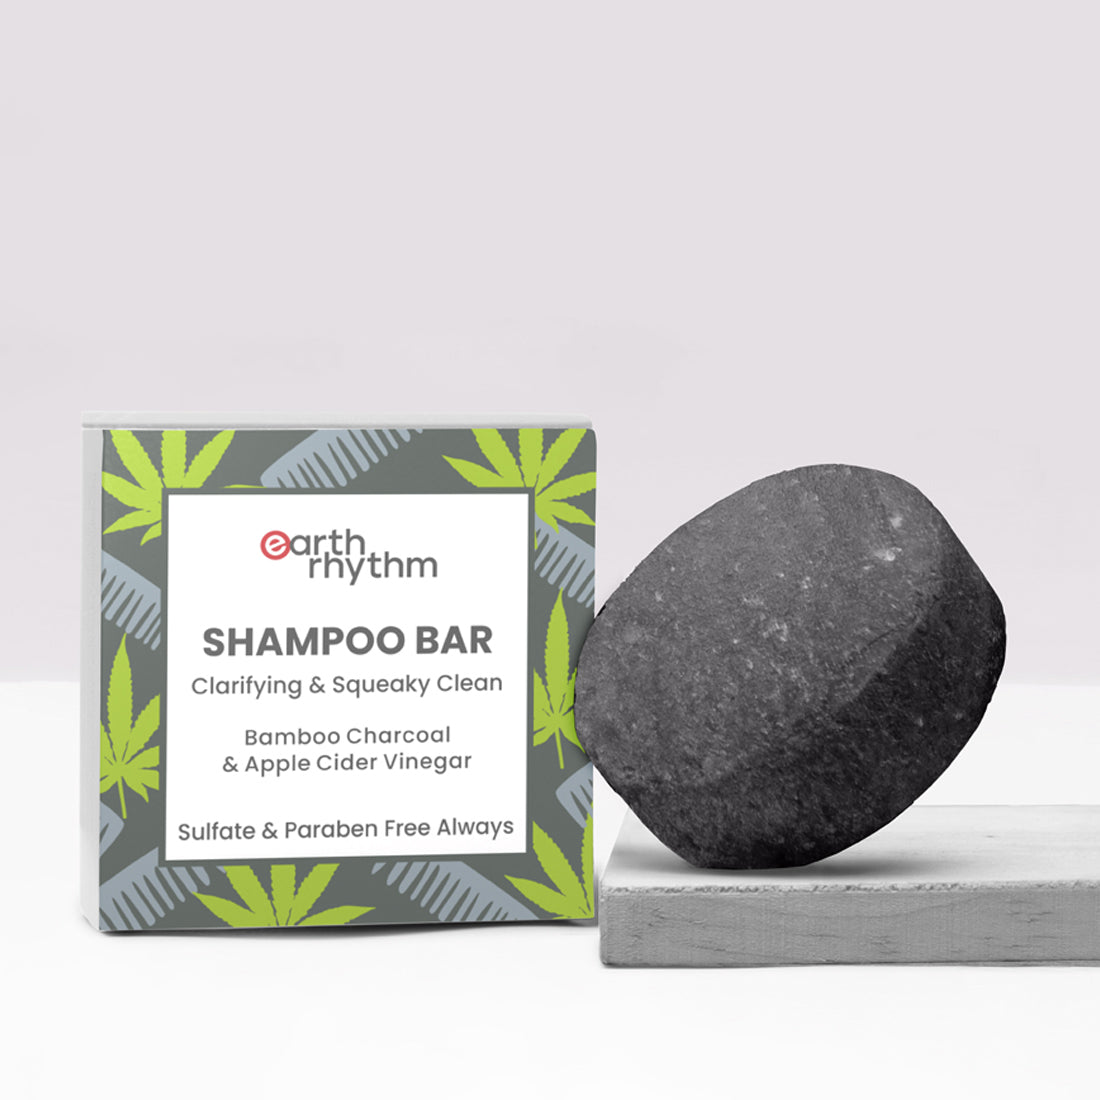 earth rhythm bamboo charcoal shampoo bar